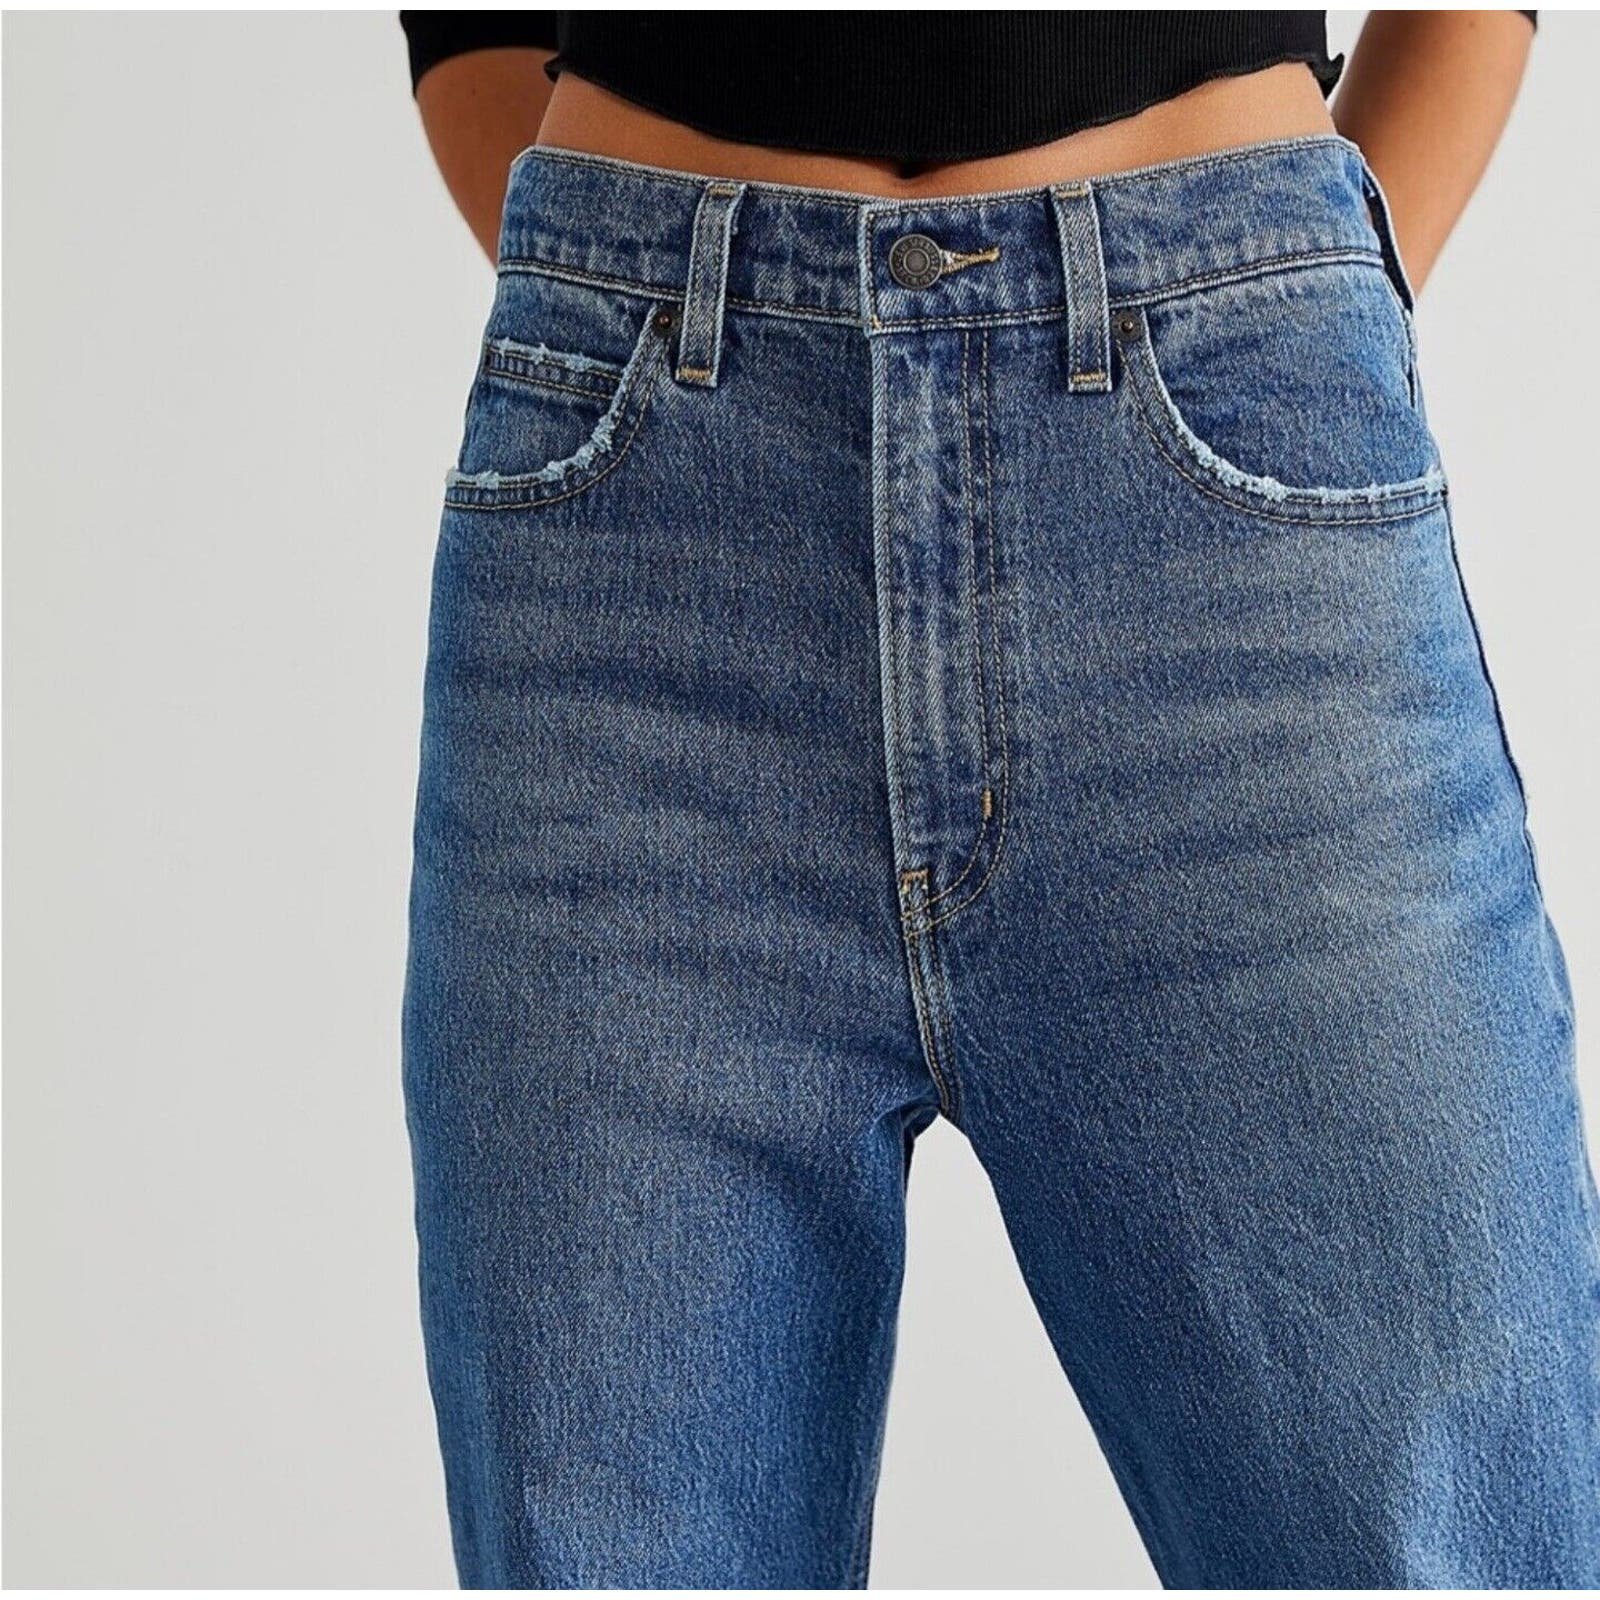 Simple Levis Women´s Premium 70s High-Rise Flare Wide Leg Jeans Size 28 /30 NLO3DGkO0 no tax